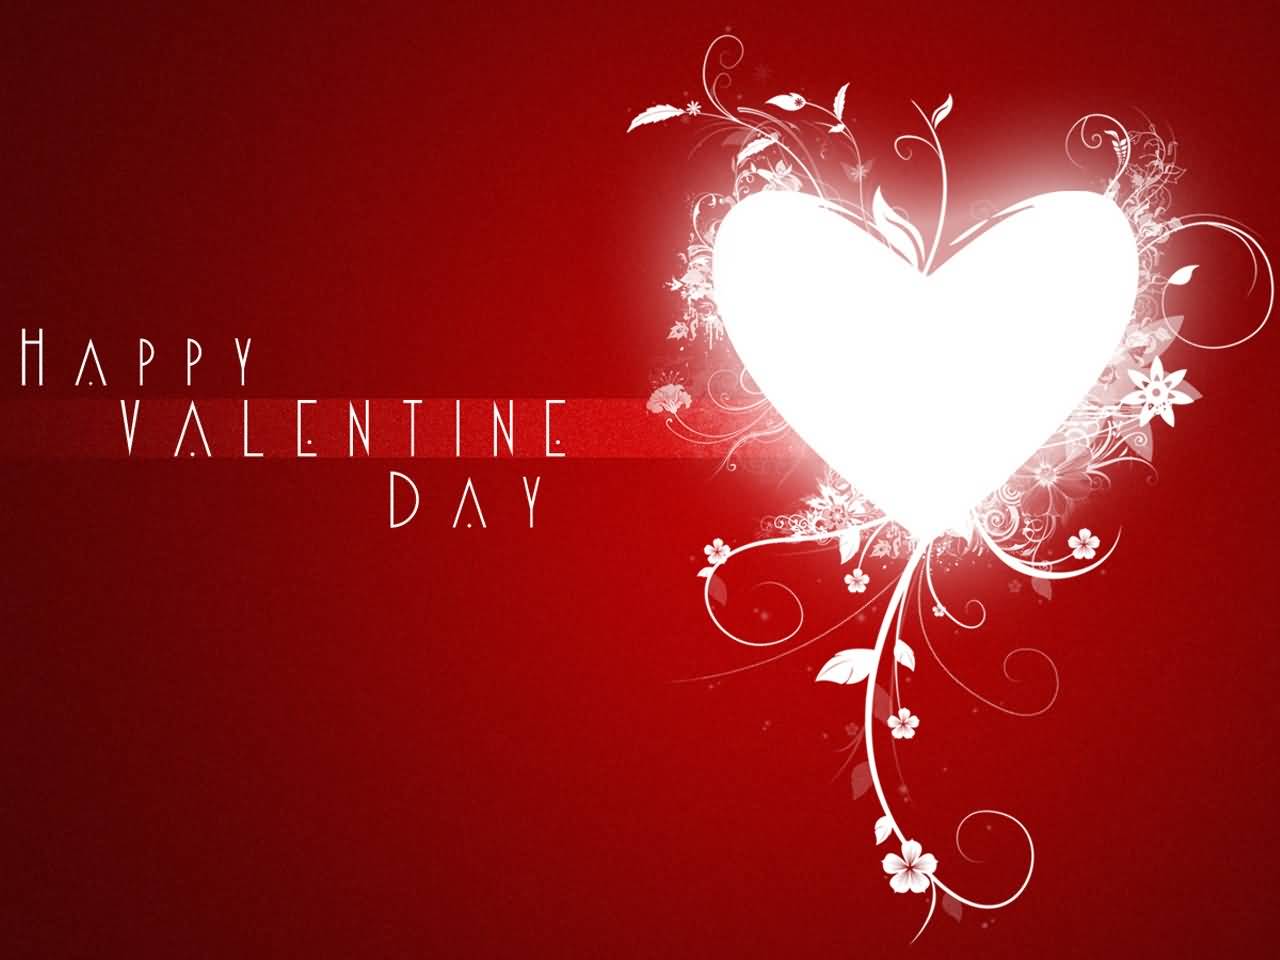 Happy Valentine's Day Glowing Heart HD Wallpaper